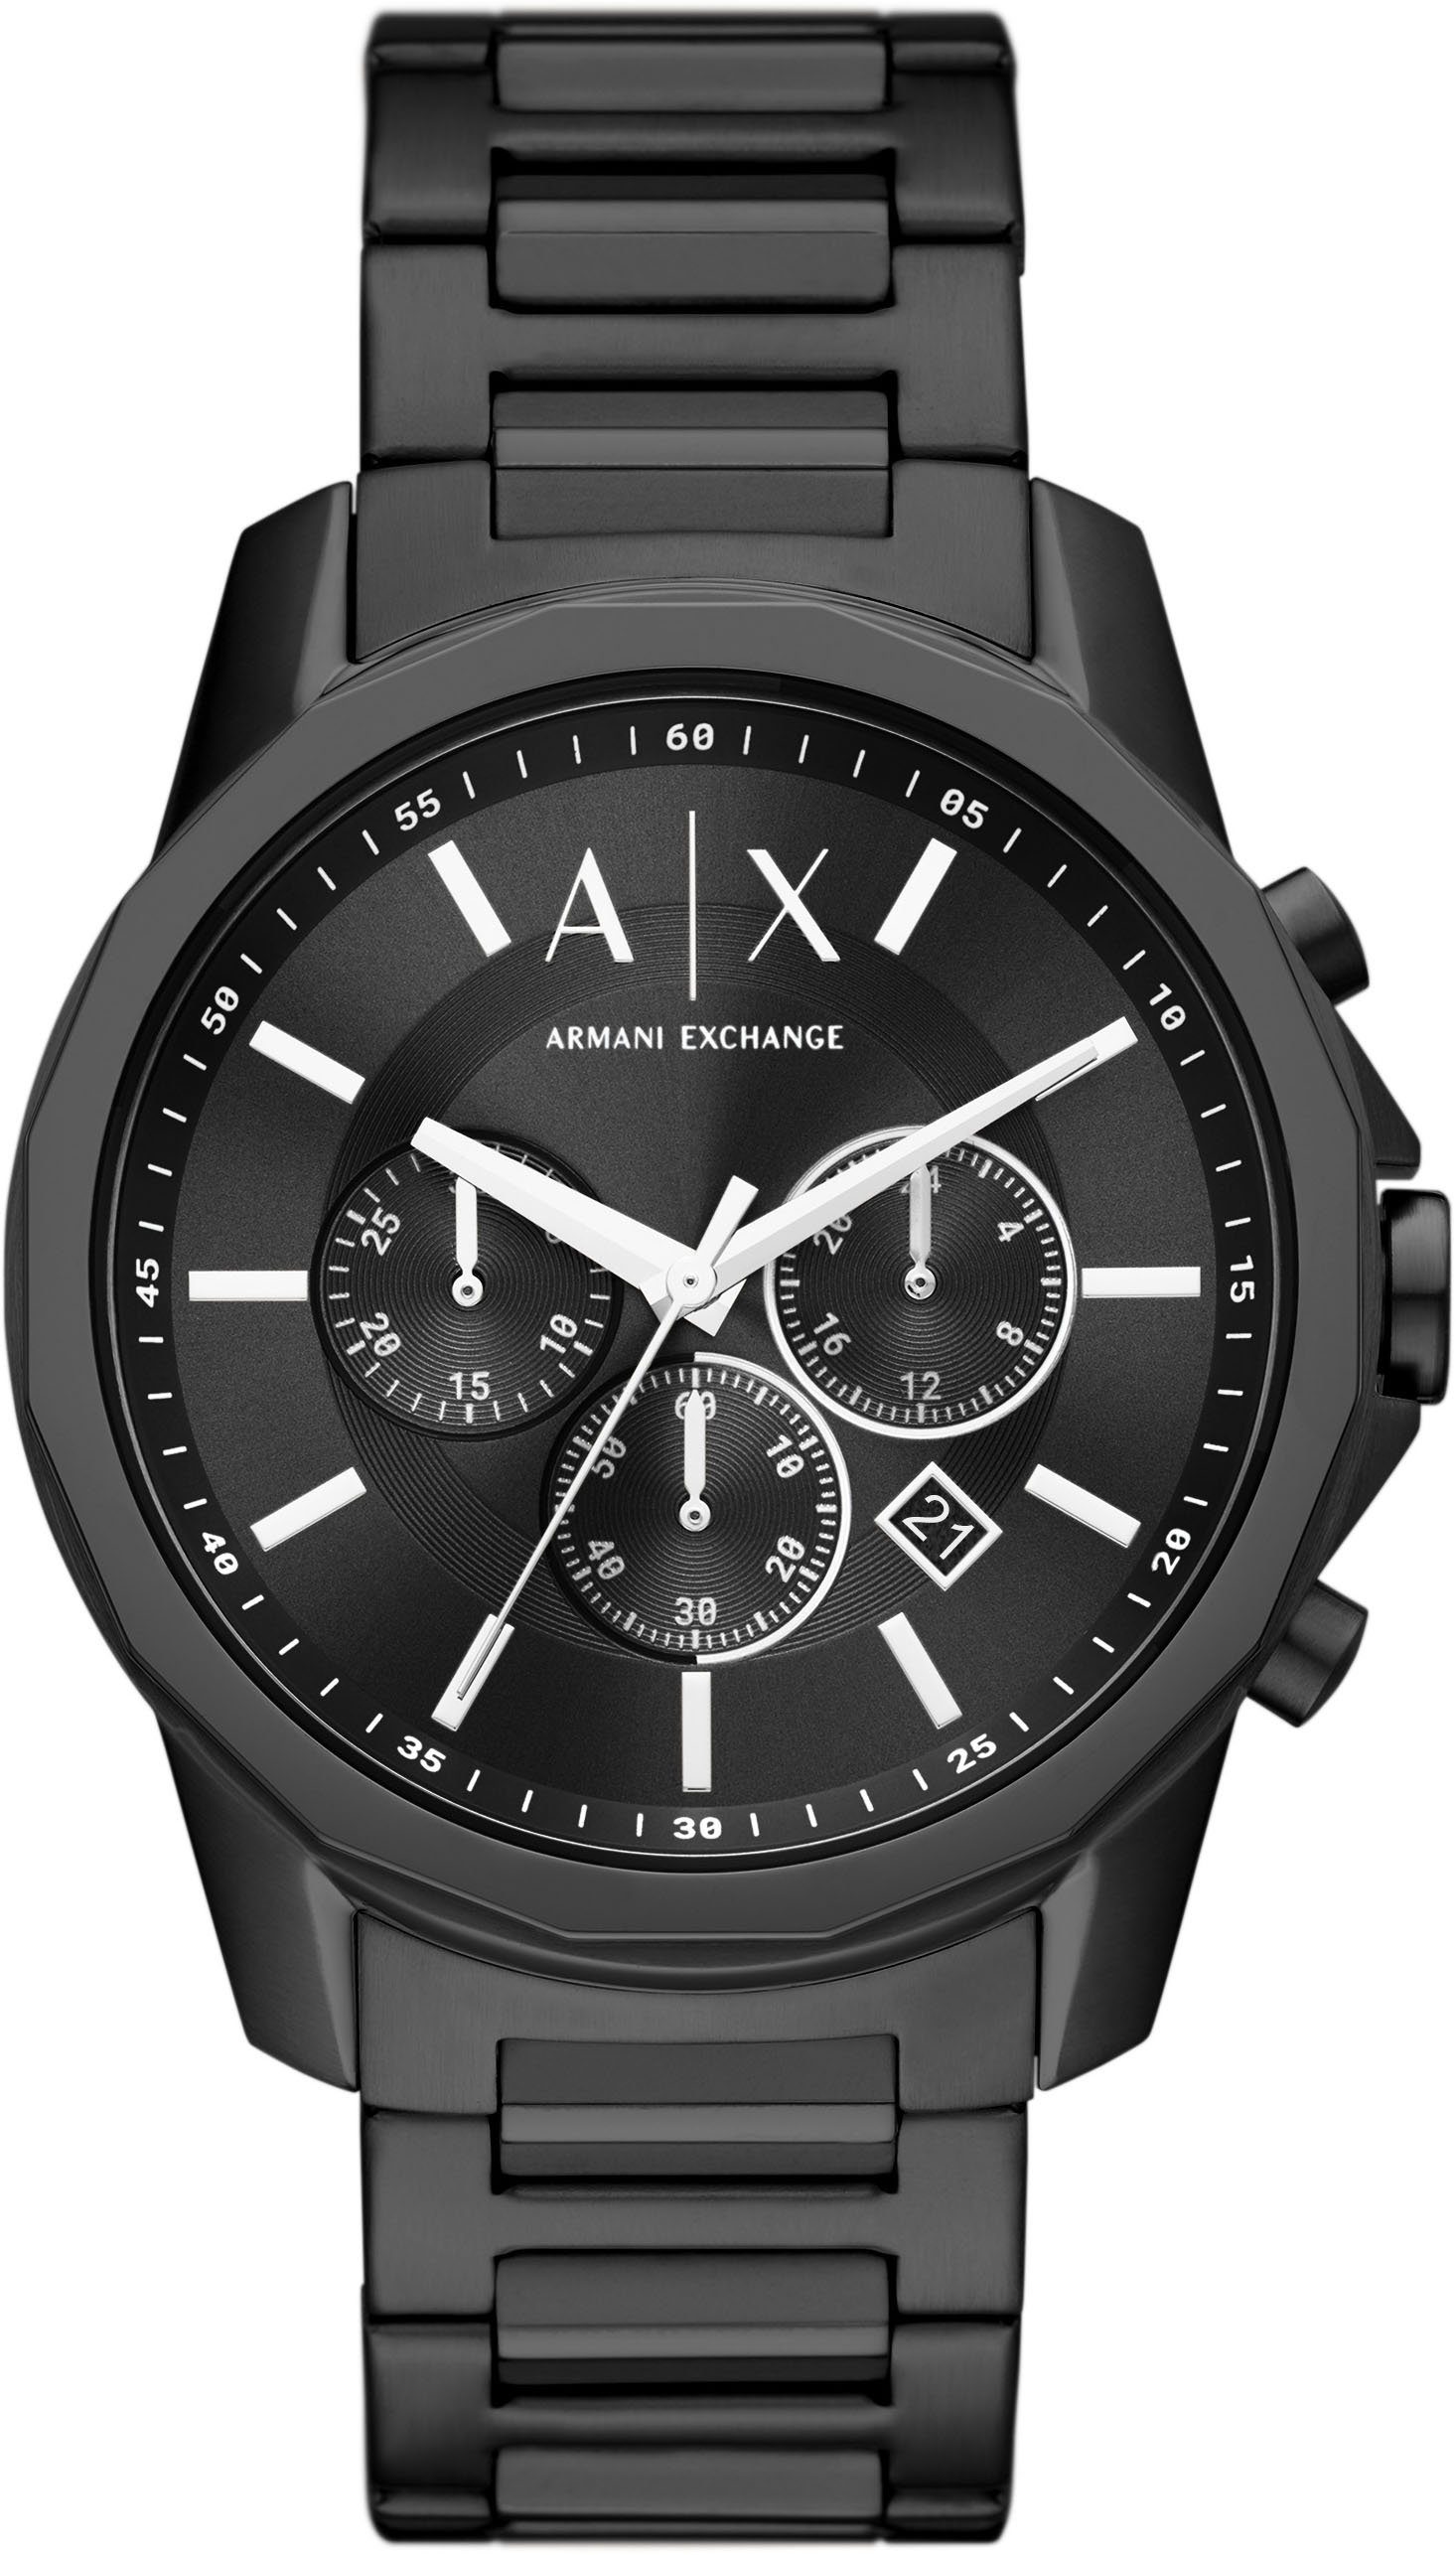 ARMANI EXCHANGE Chronograph AX1722, Quarzuhr, Armbanduhr, Herrenuhr, Stoppfunktion, analog